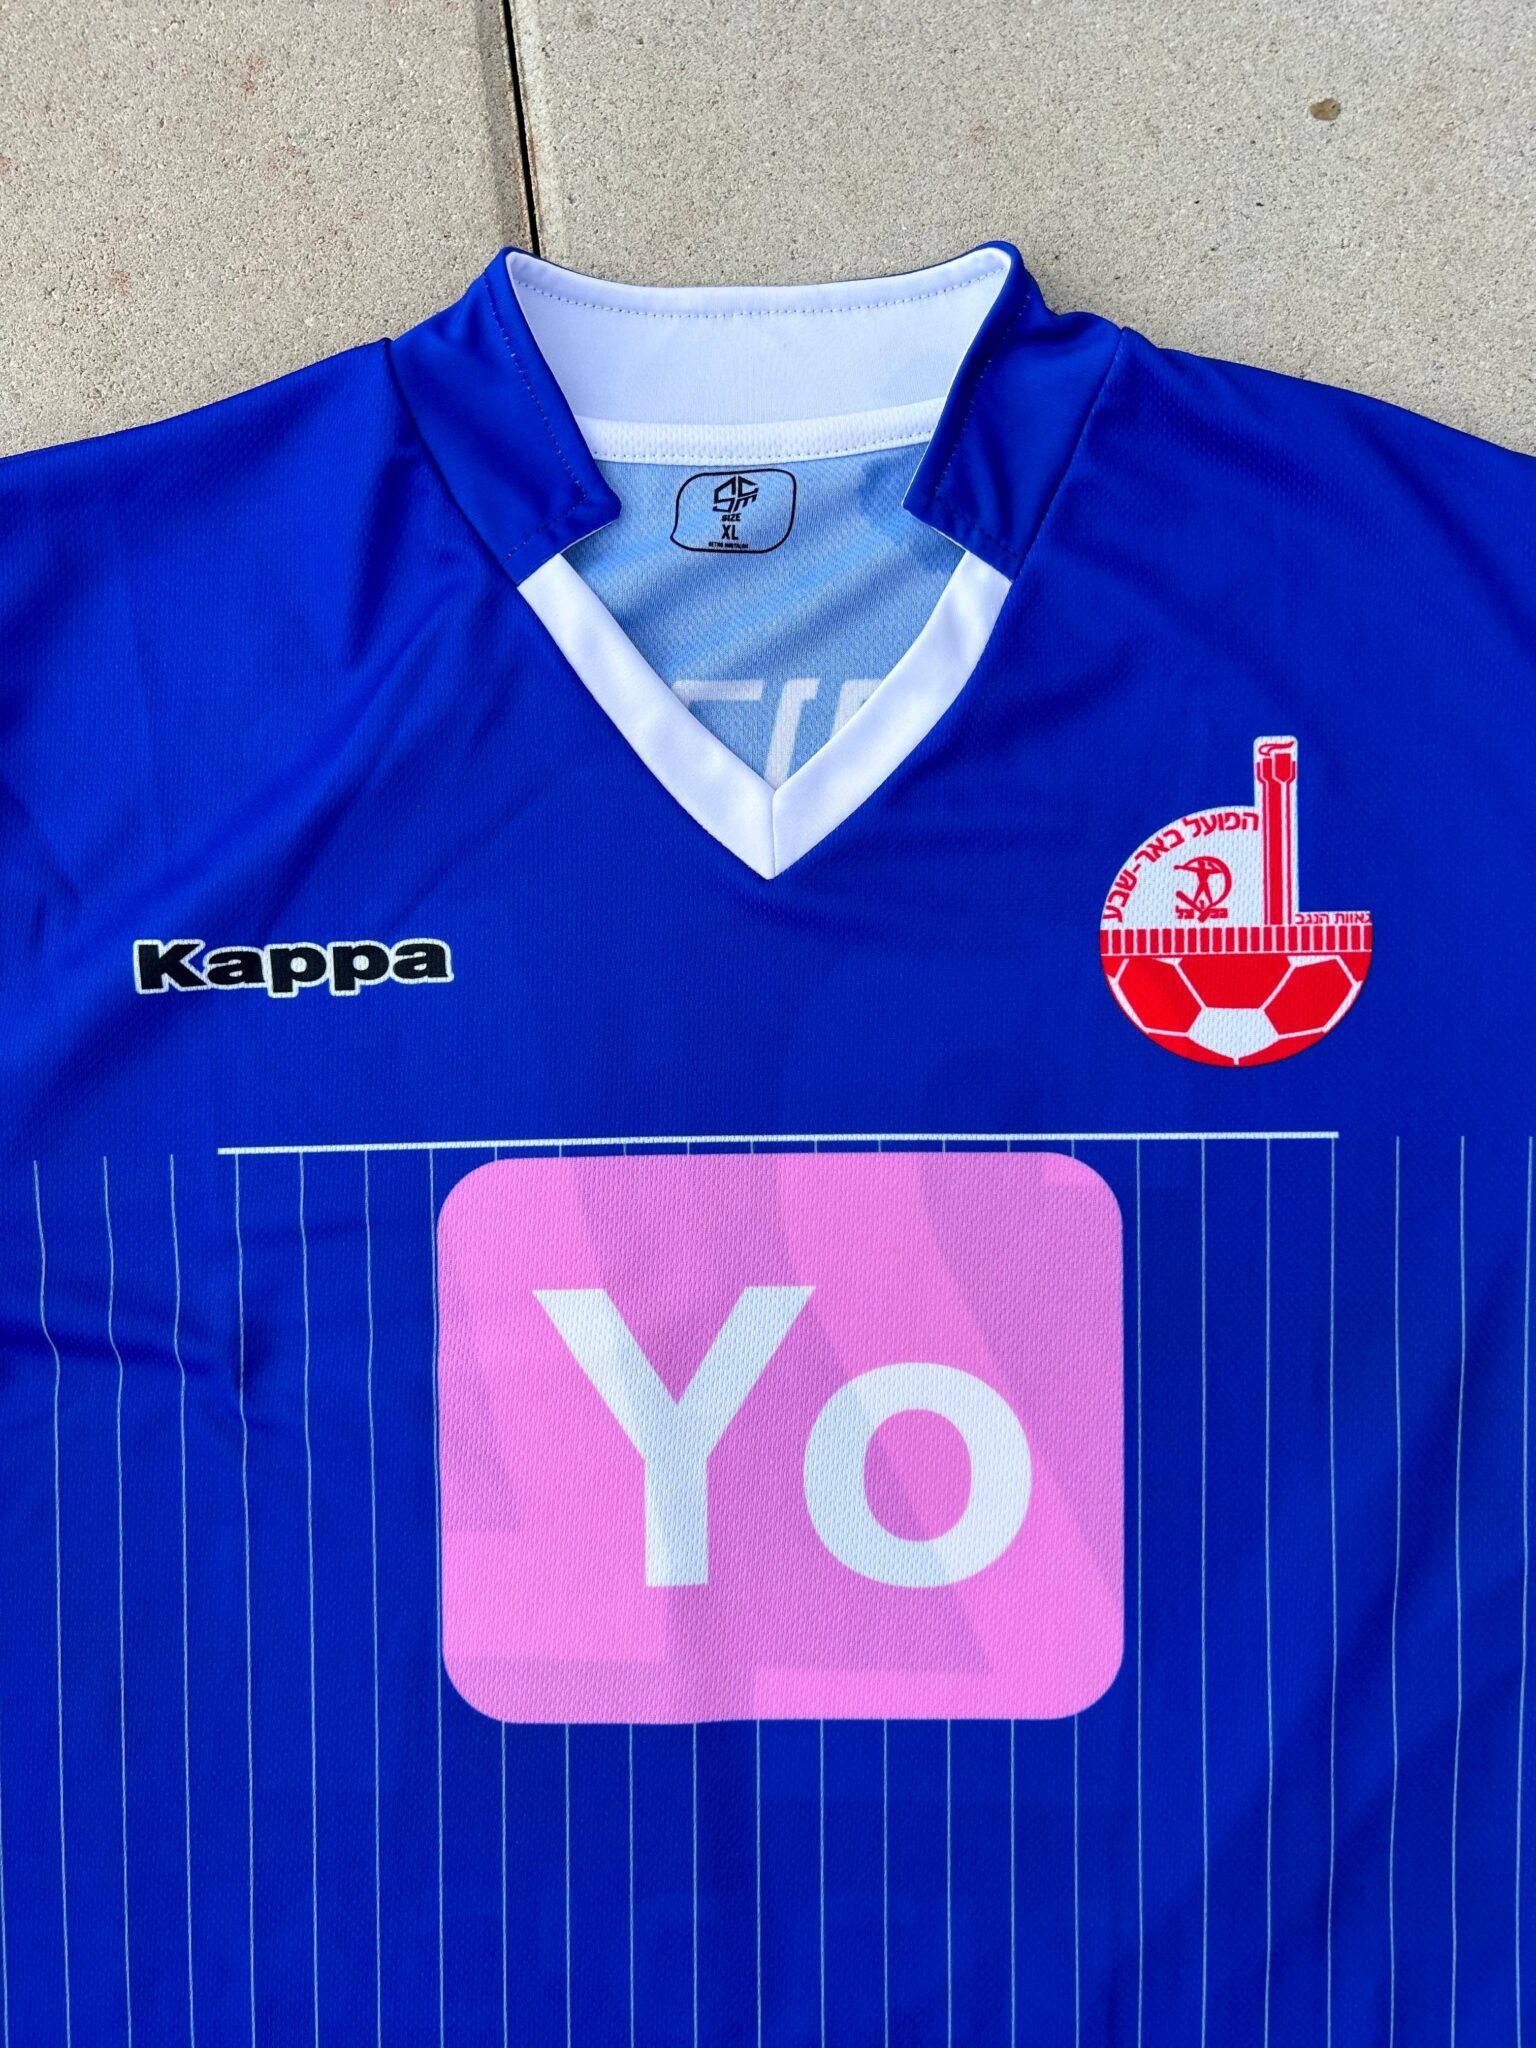 Hapoel Beer-Sheva Home Shirt Vintage Retro 2014/2015 Jersey Israel Football מועדון הכדורגל הפועל באר שבע - Sport Club Memories